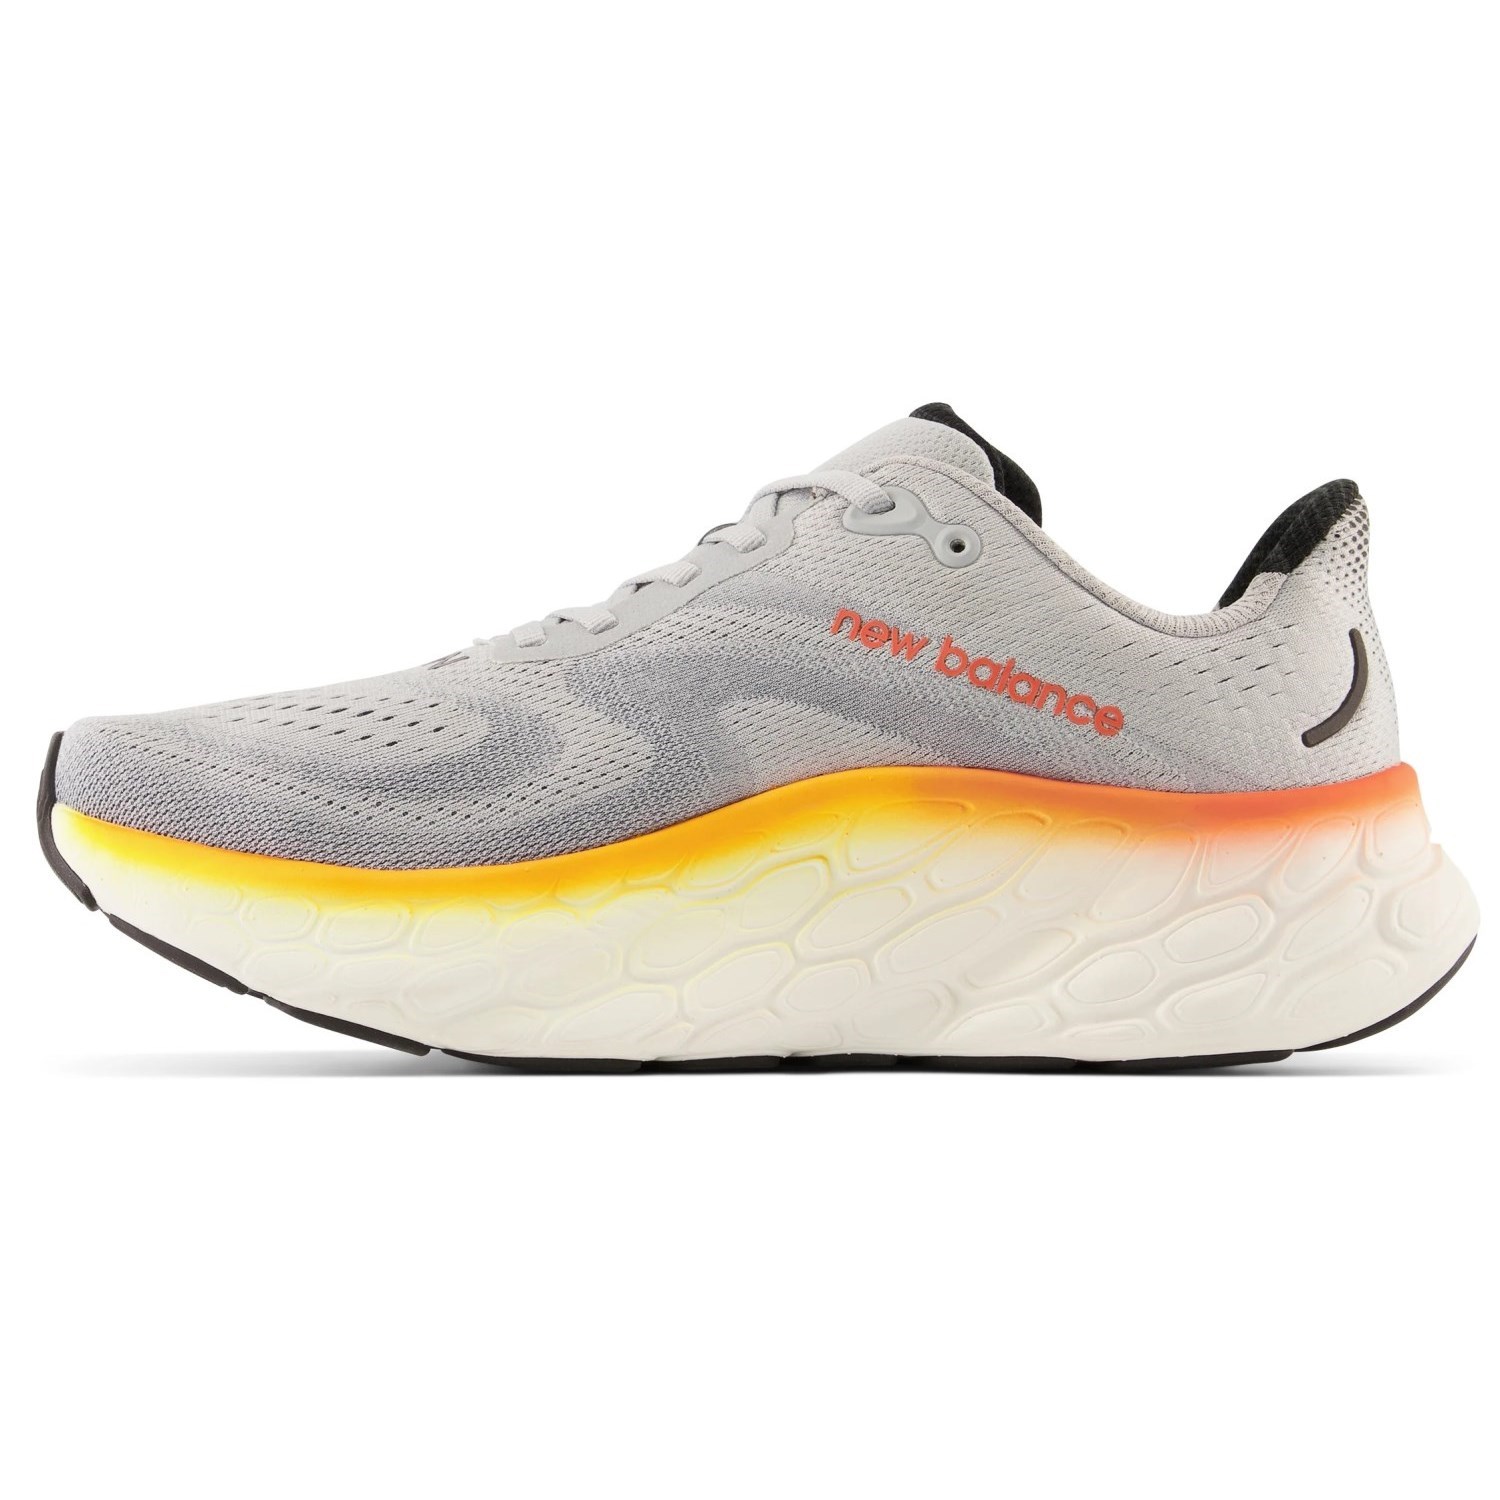 New Balance Fresh Foam More v4 - Mens Running Shoes - Aluminum Grey ...